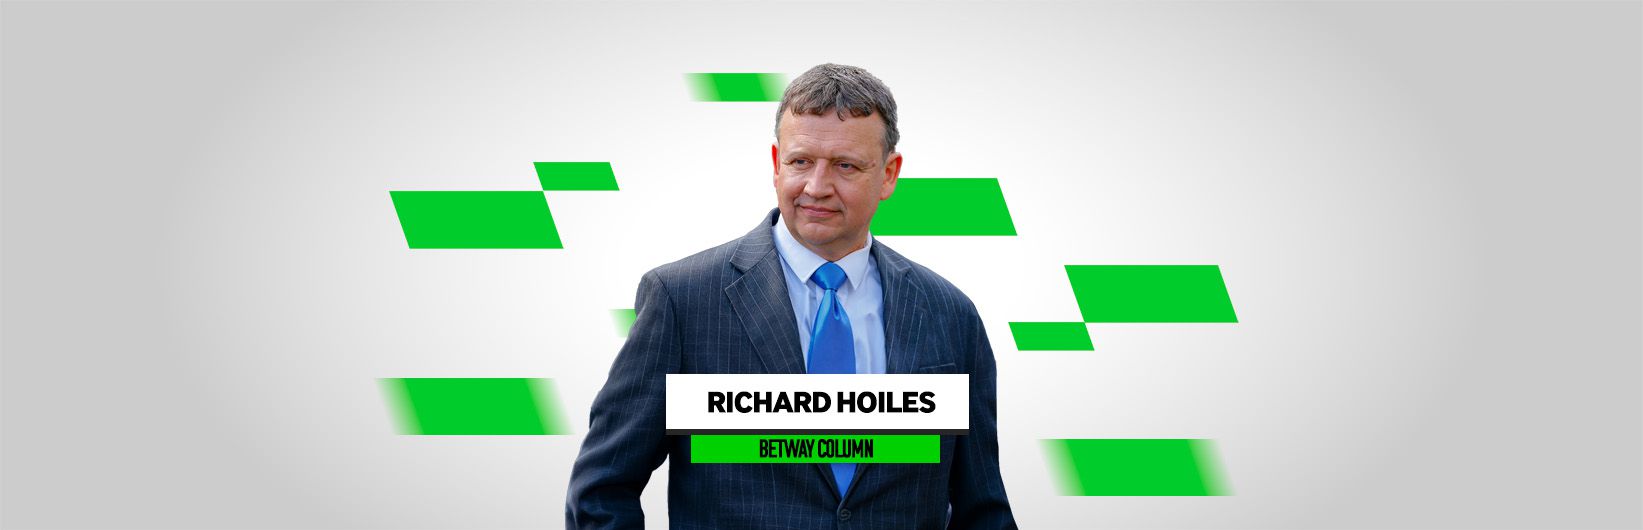 Richard Hoiles: 5 Wednesday picks from around the UK